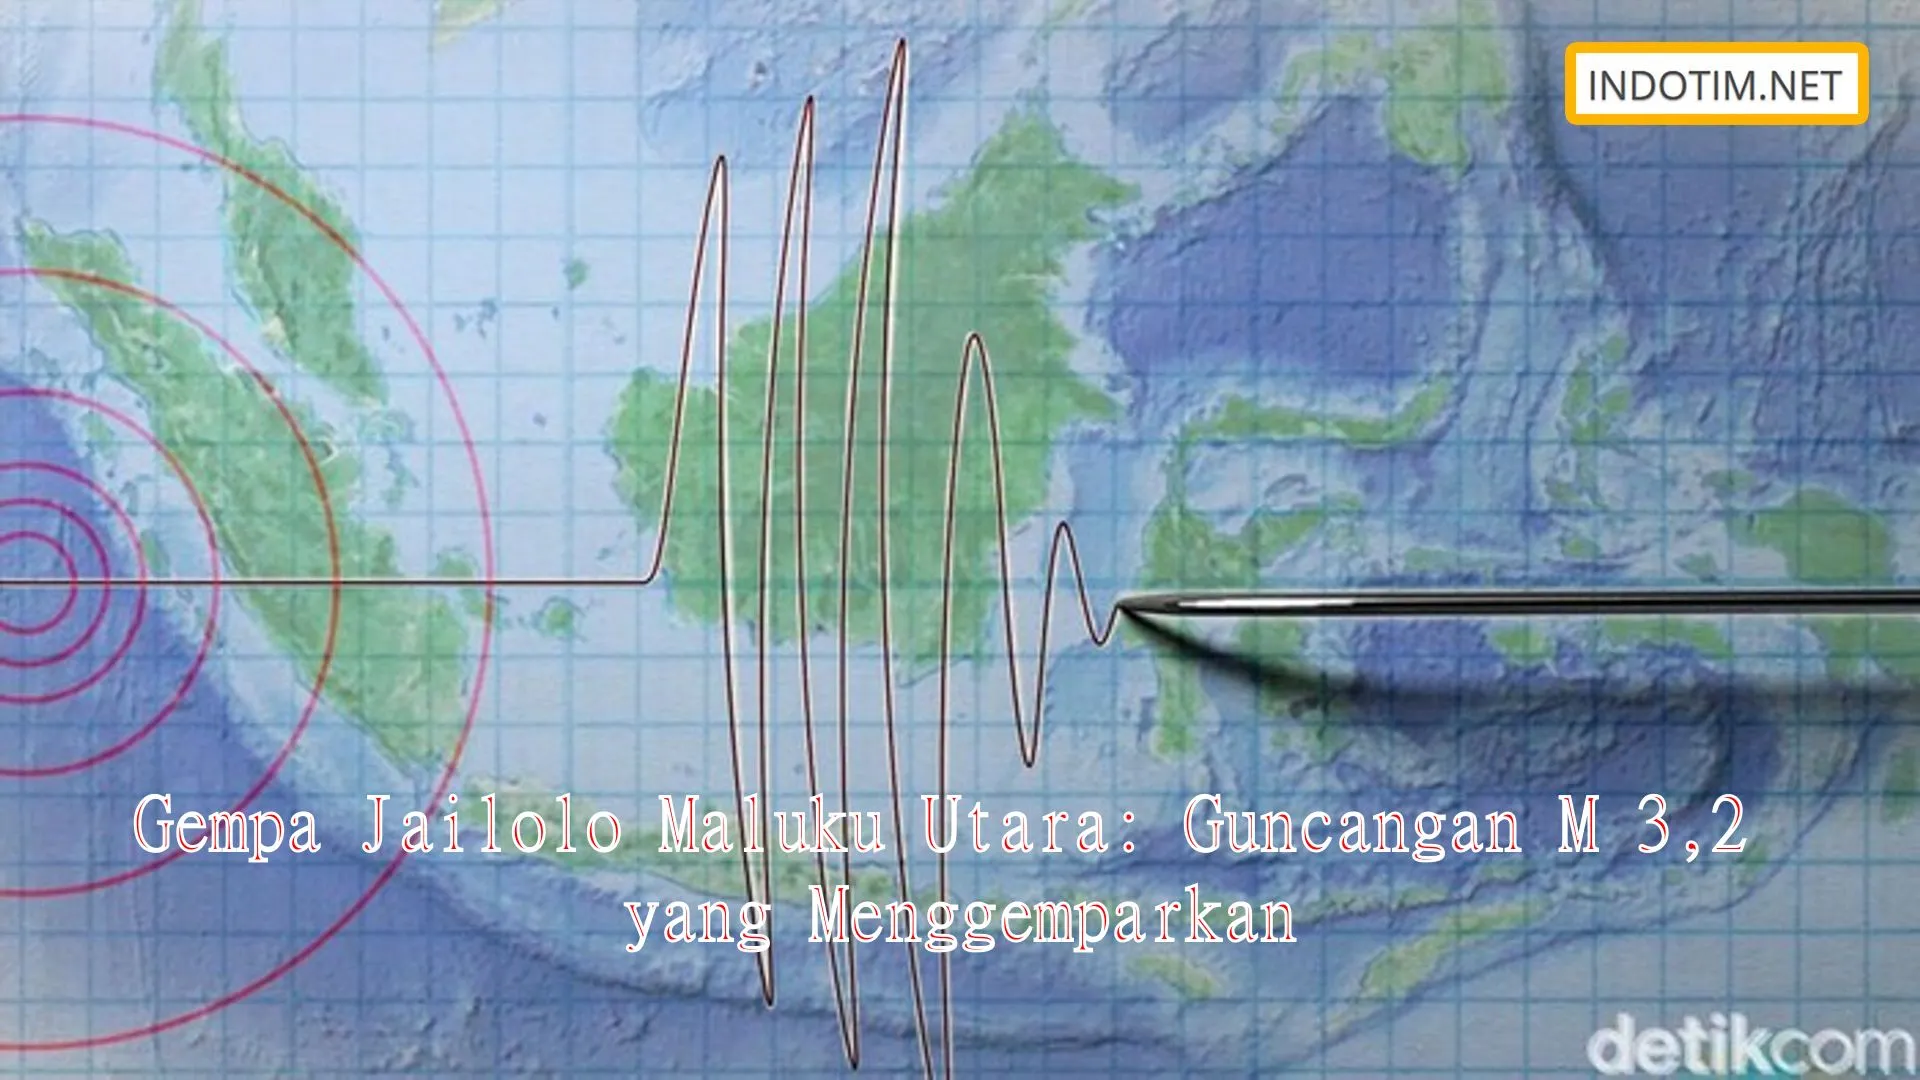 Gempa Jailolo Maluku Utara: Guncangan M 3,2 yang Menggemparkan